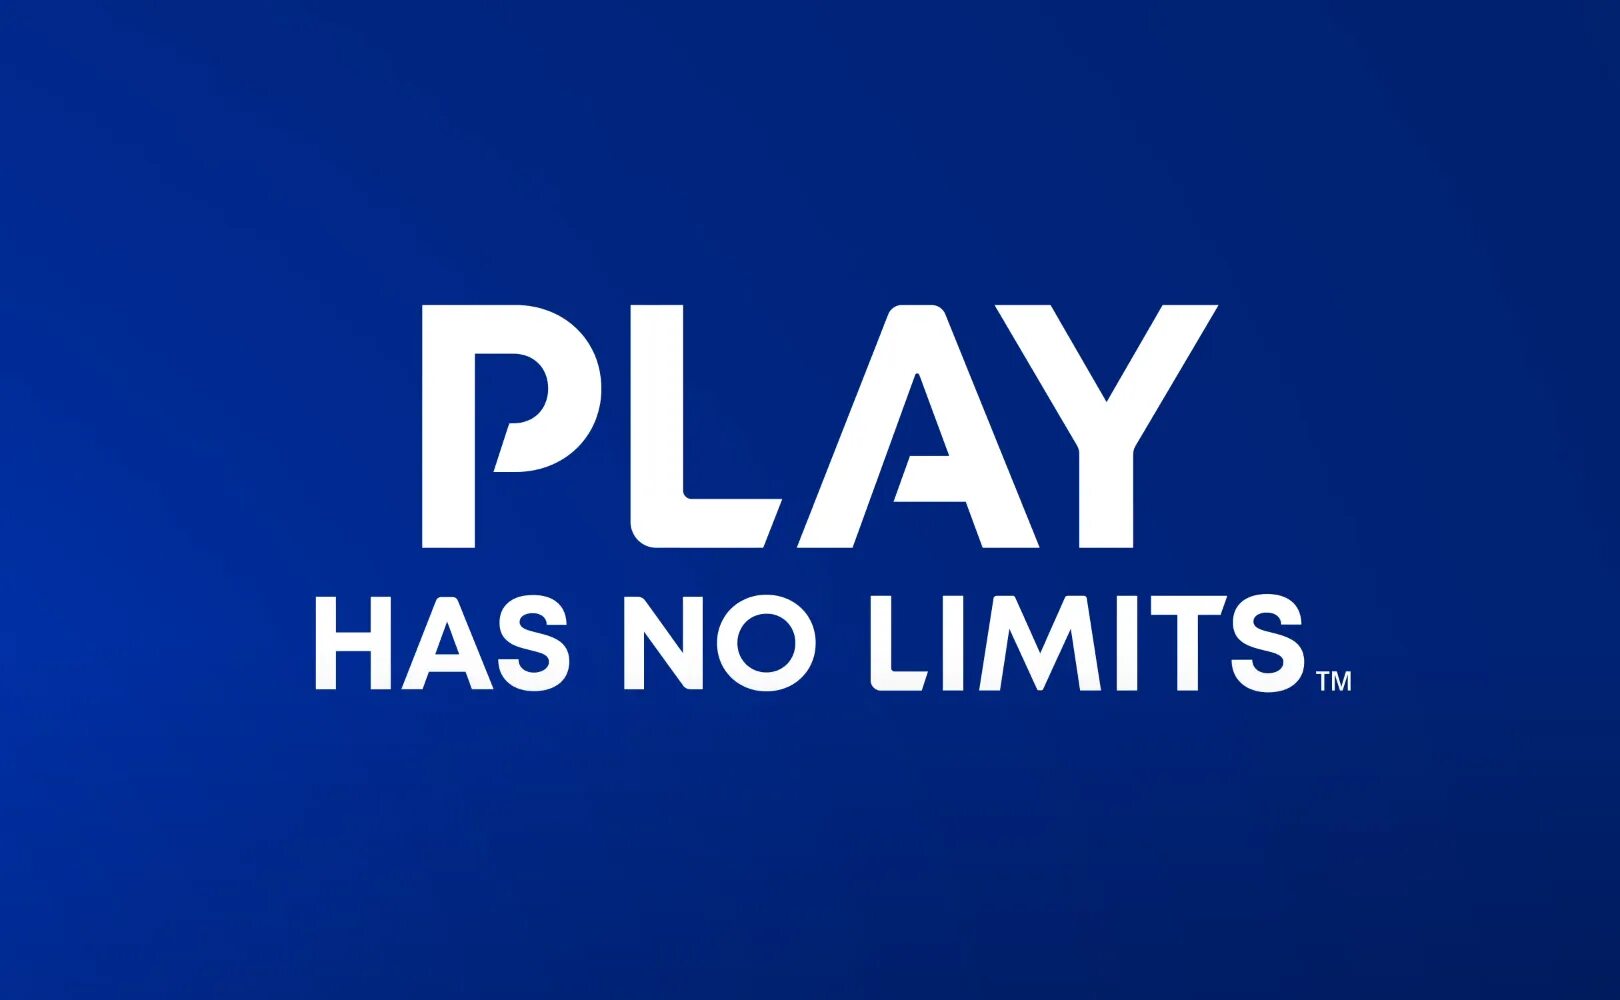 Has no member named. PLAYSTATION слоган. Play has limits. Play has no limits. Sony Play has no limits.